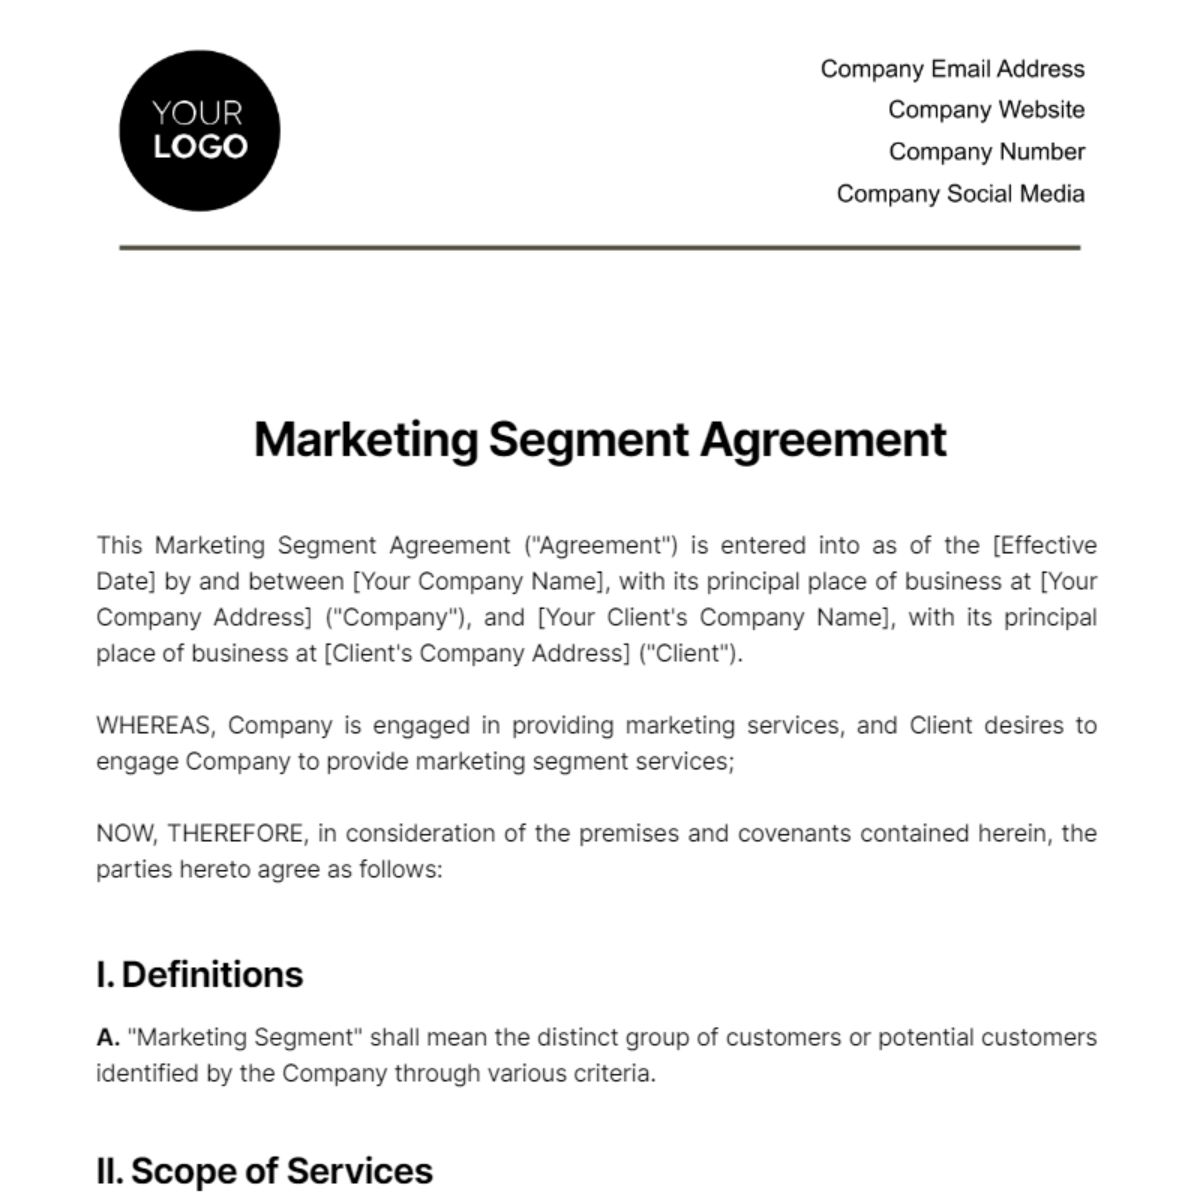 Marketing Segment Agreement Template